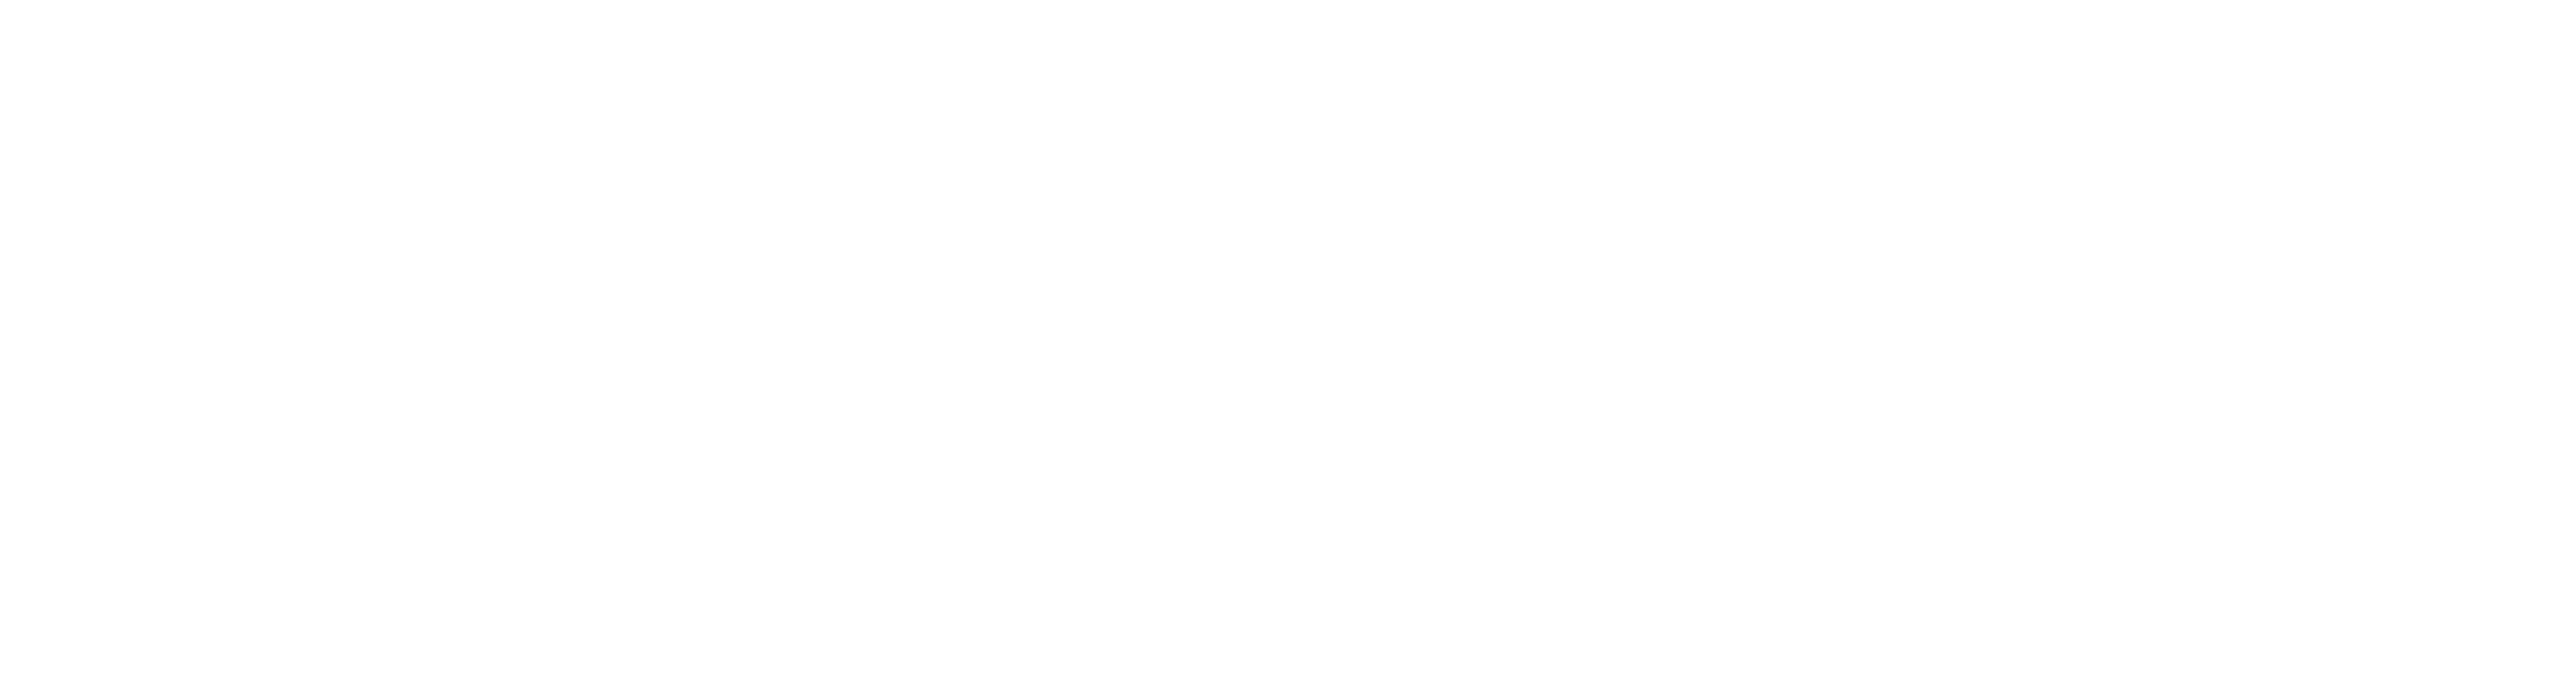 Sip Coffee White Logo